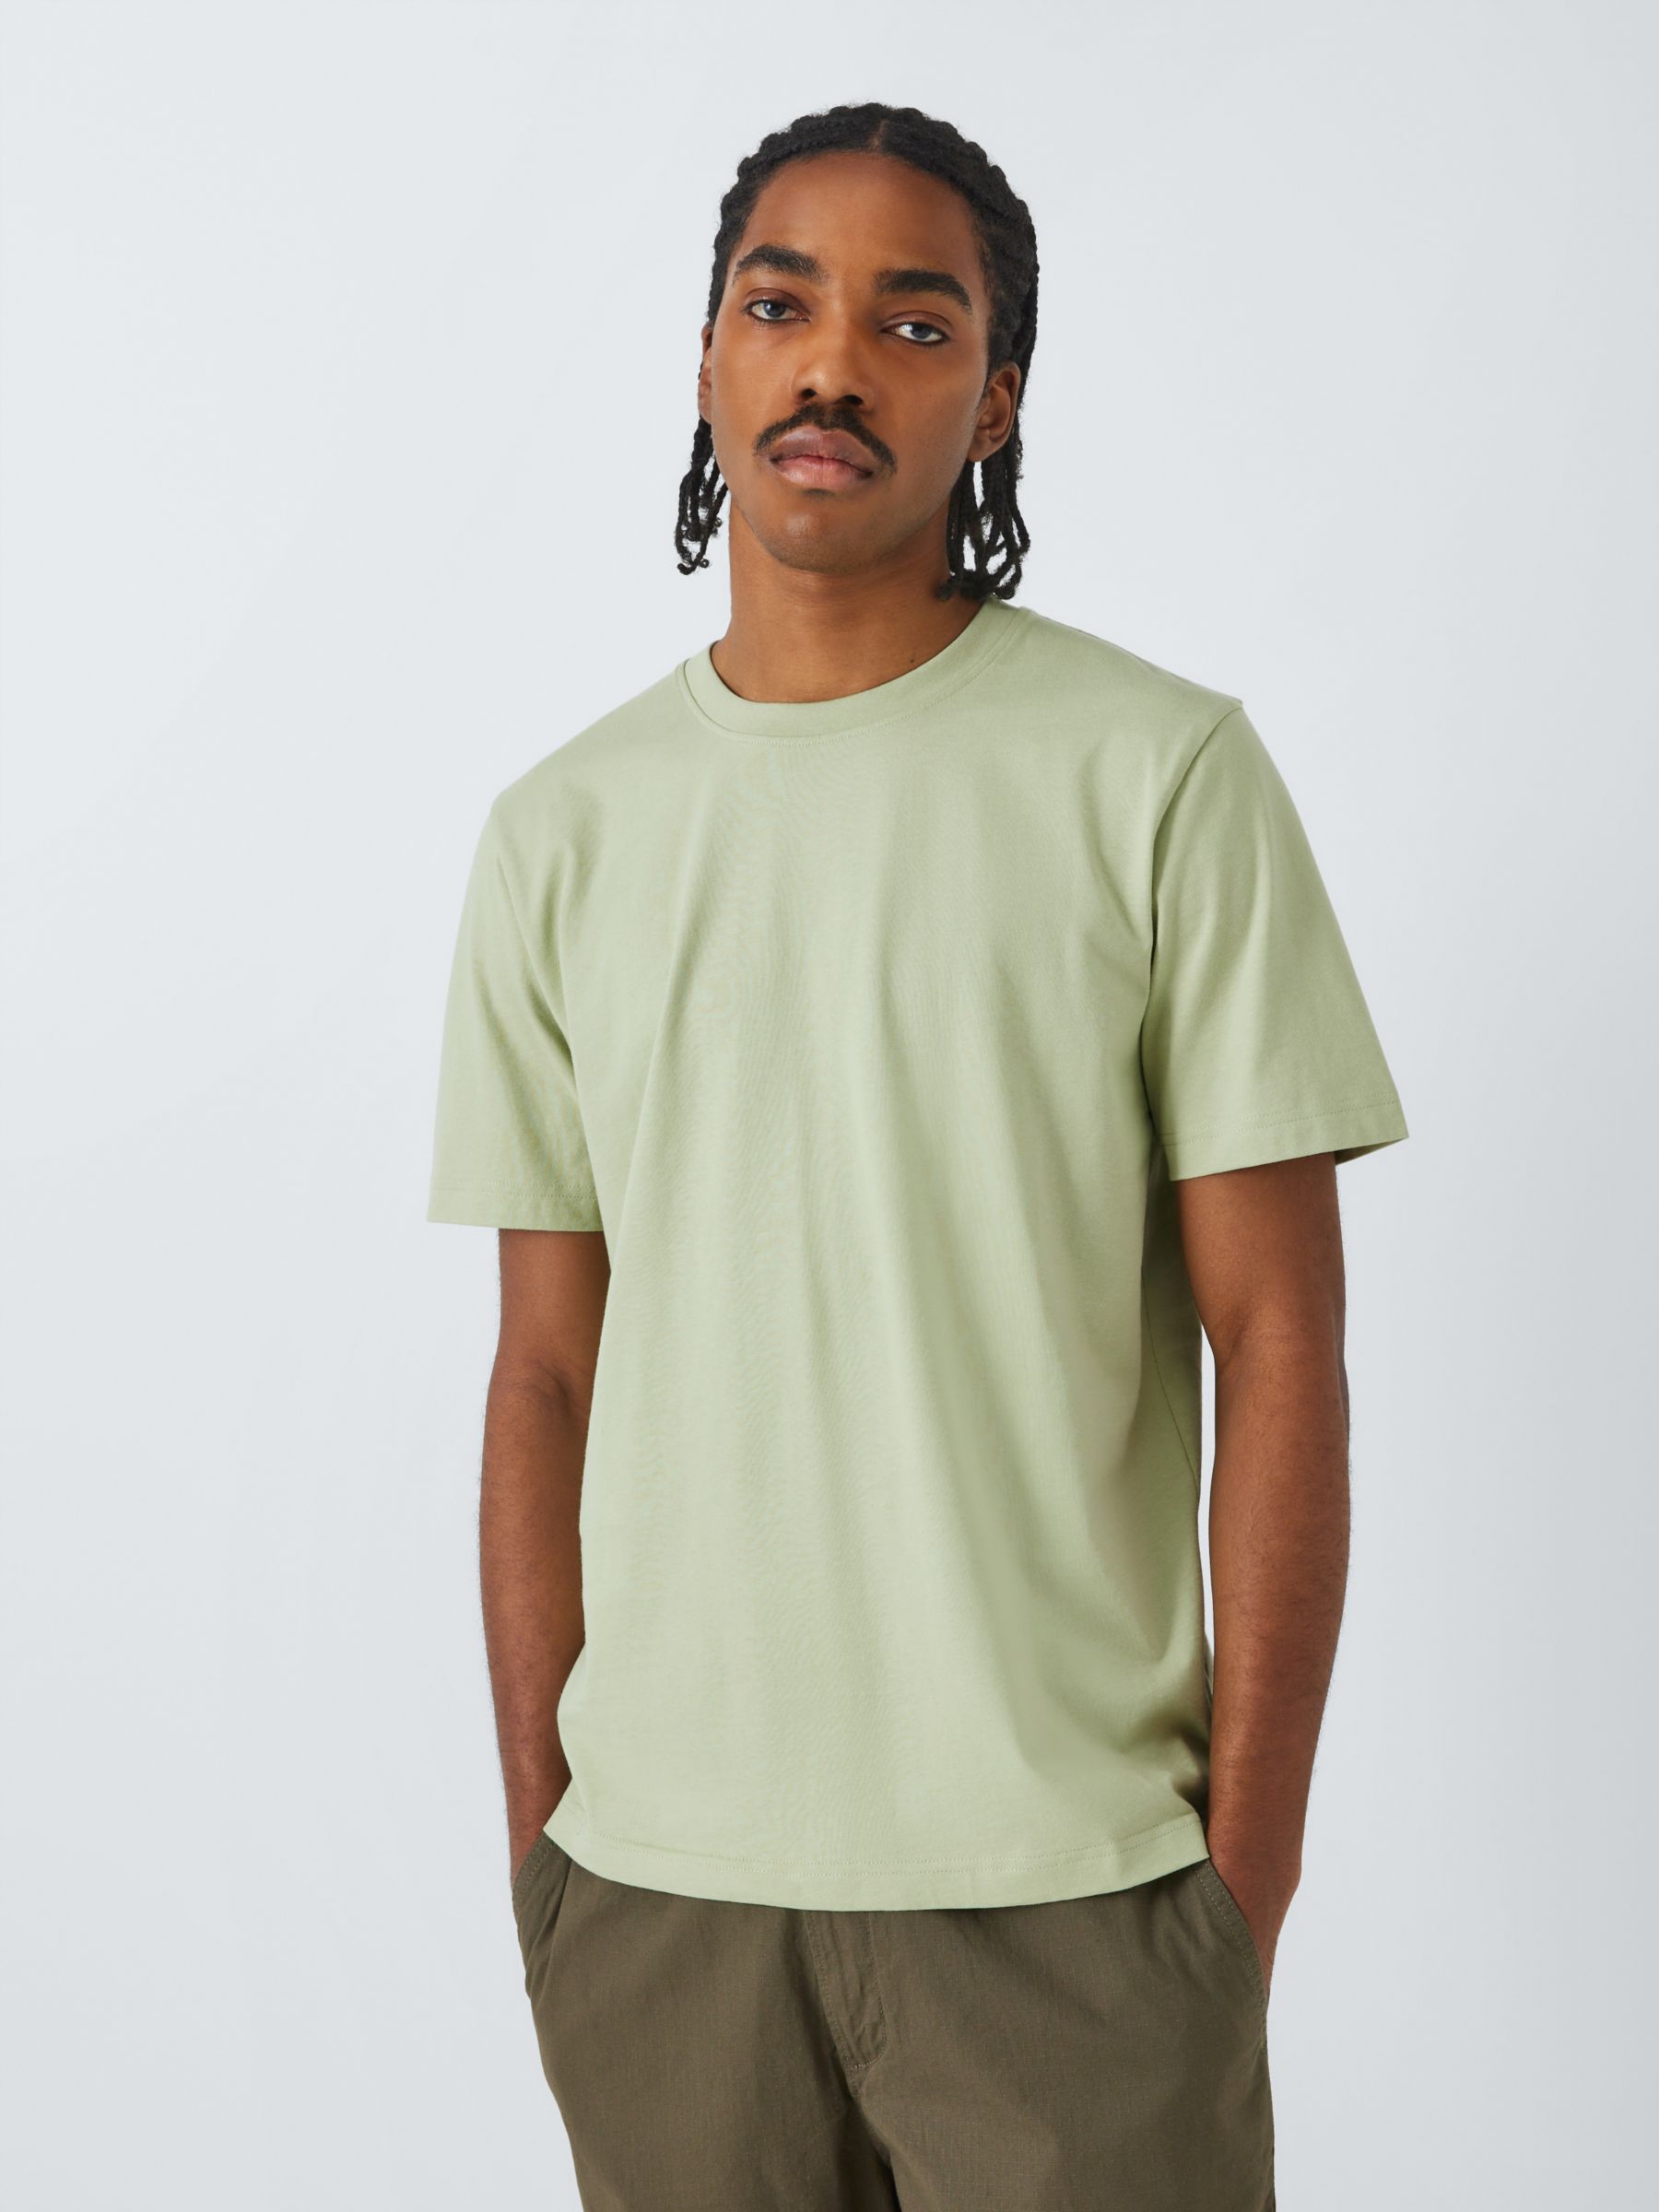 John Lewis ANYDAY Short Sleeve Plain T-Shirt, Celadon Green, S